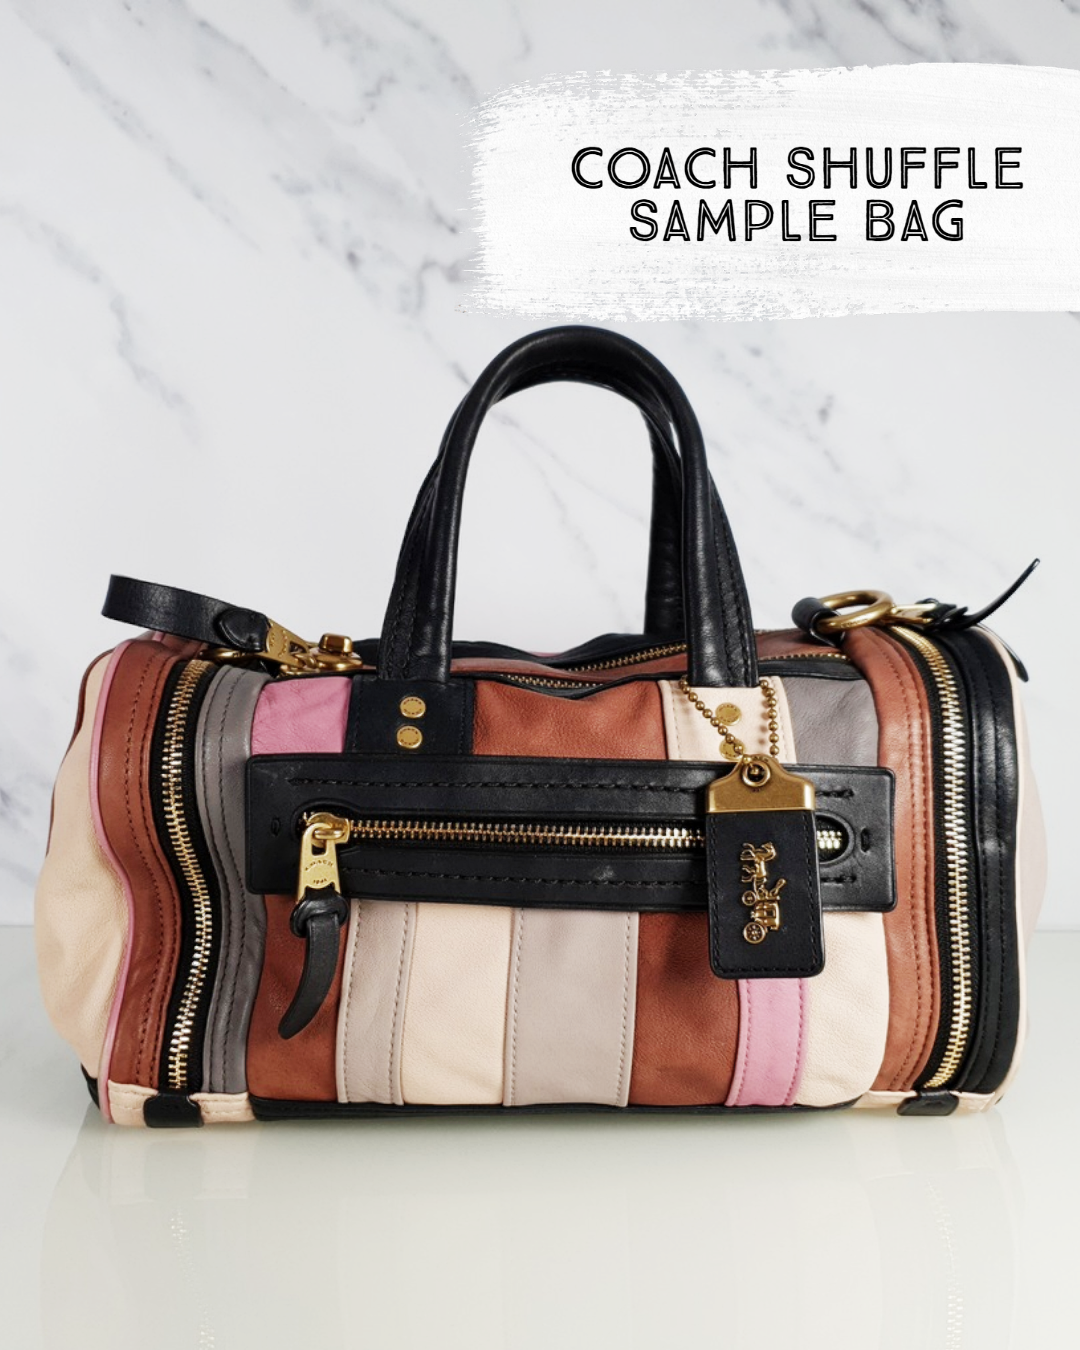 Coach Shuffle Sample Bag - Essex Fashion House